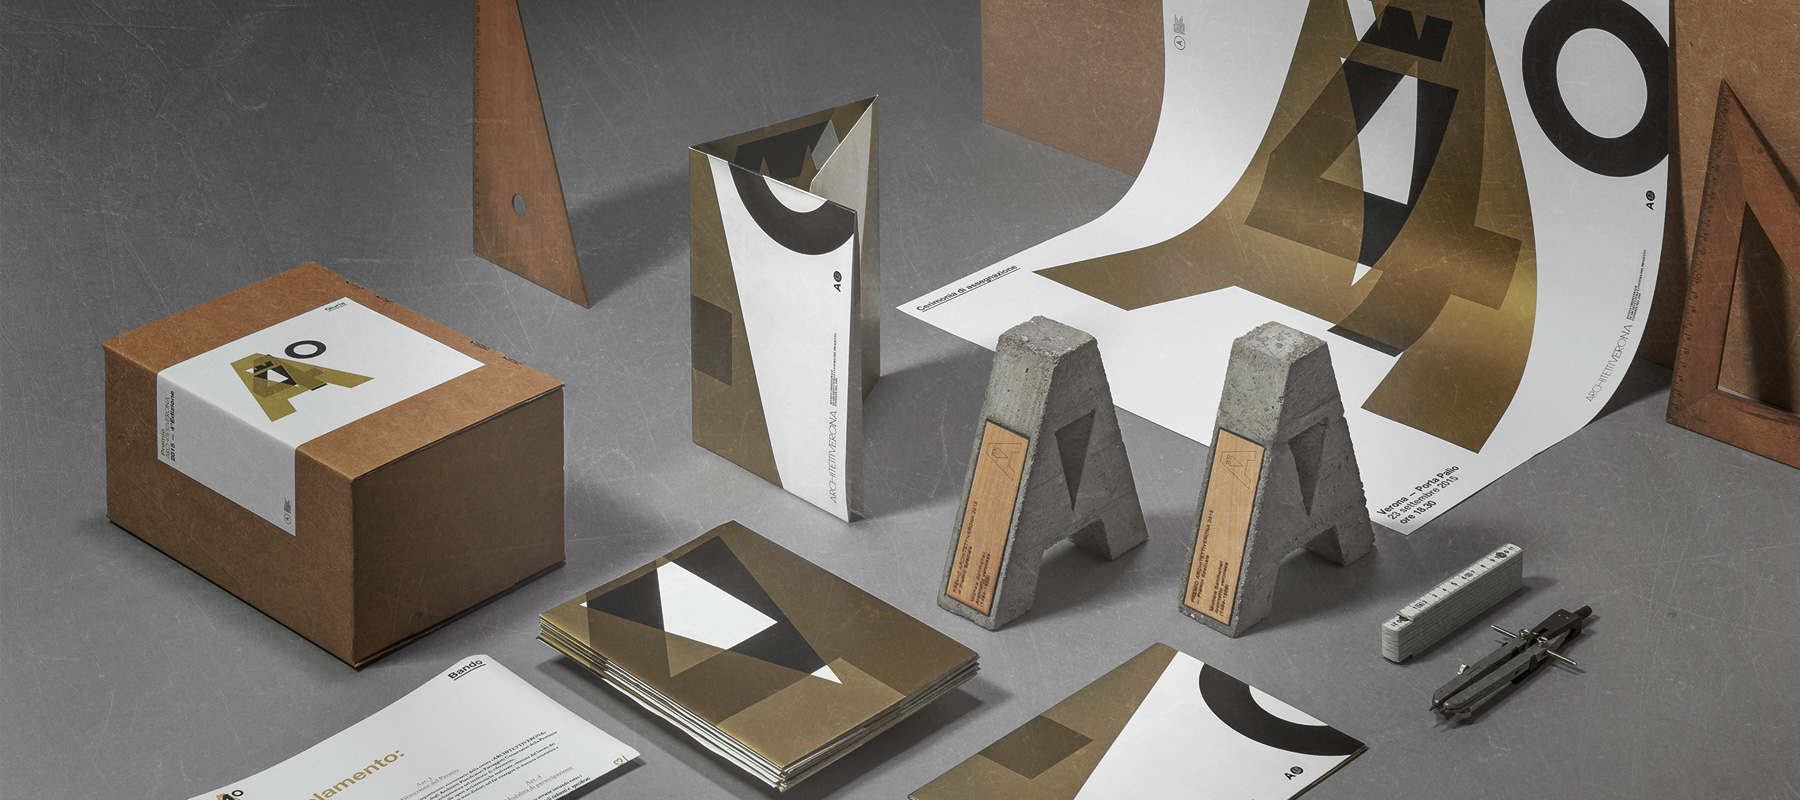 Architecture Design - Award & Branding by Happycentro